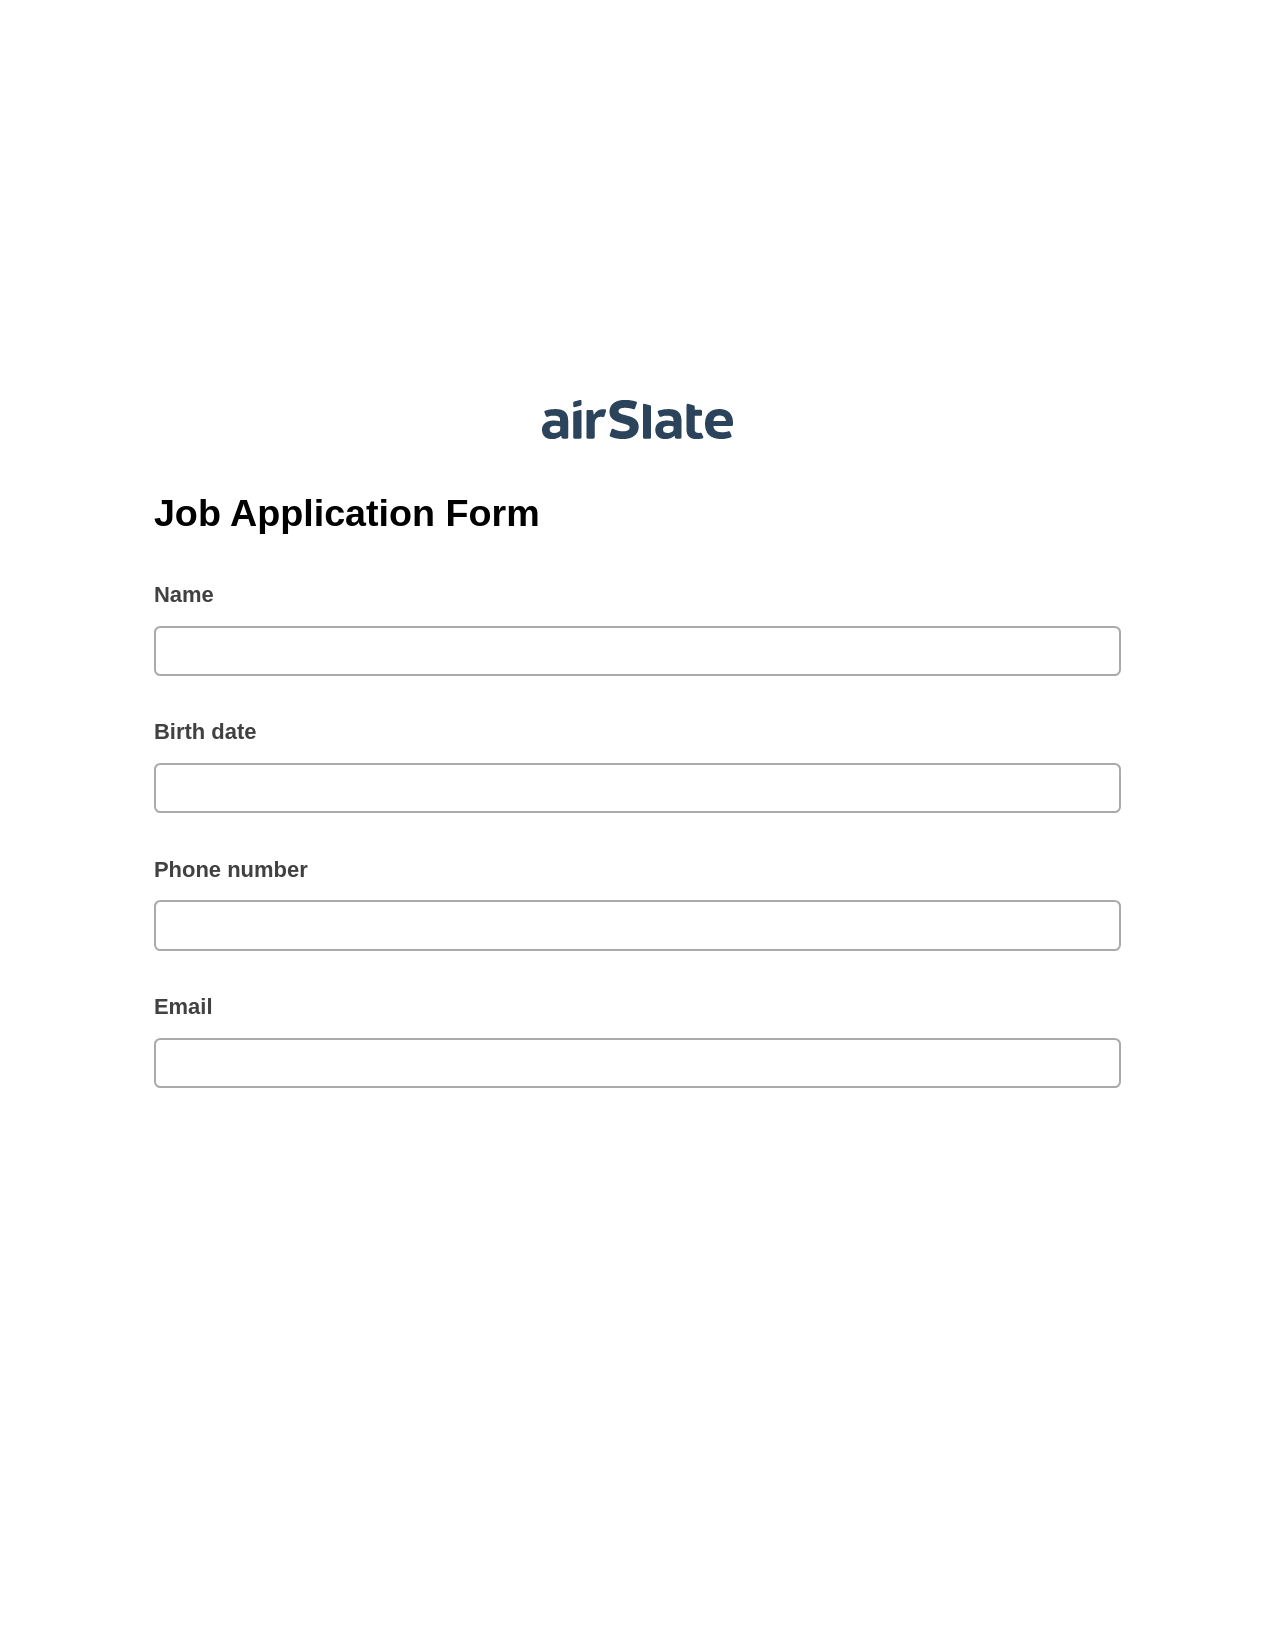 Multirole Job Application Form Pre-fill from CSV File Dropdown Options Bot, Create slate addon, Slack Notification Postfinish Bot